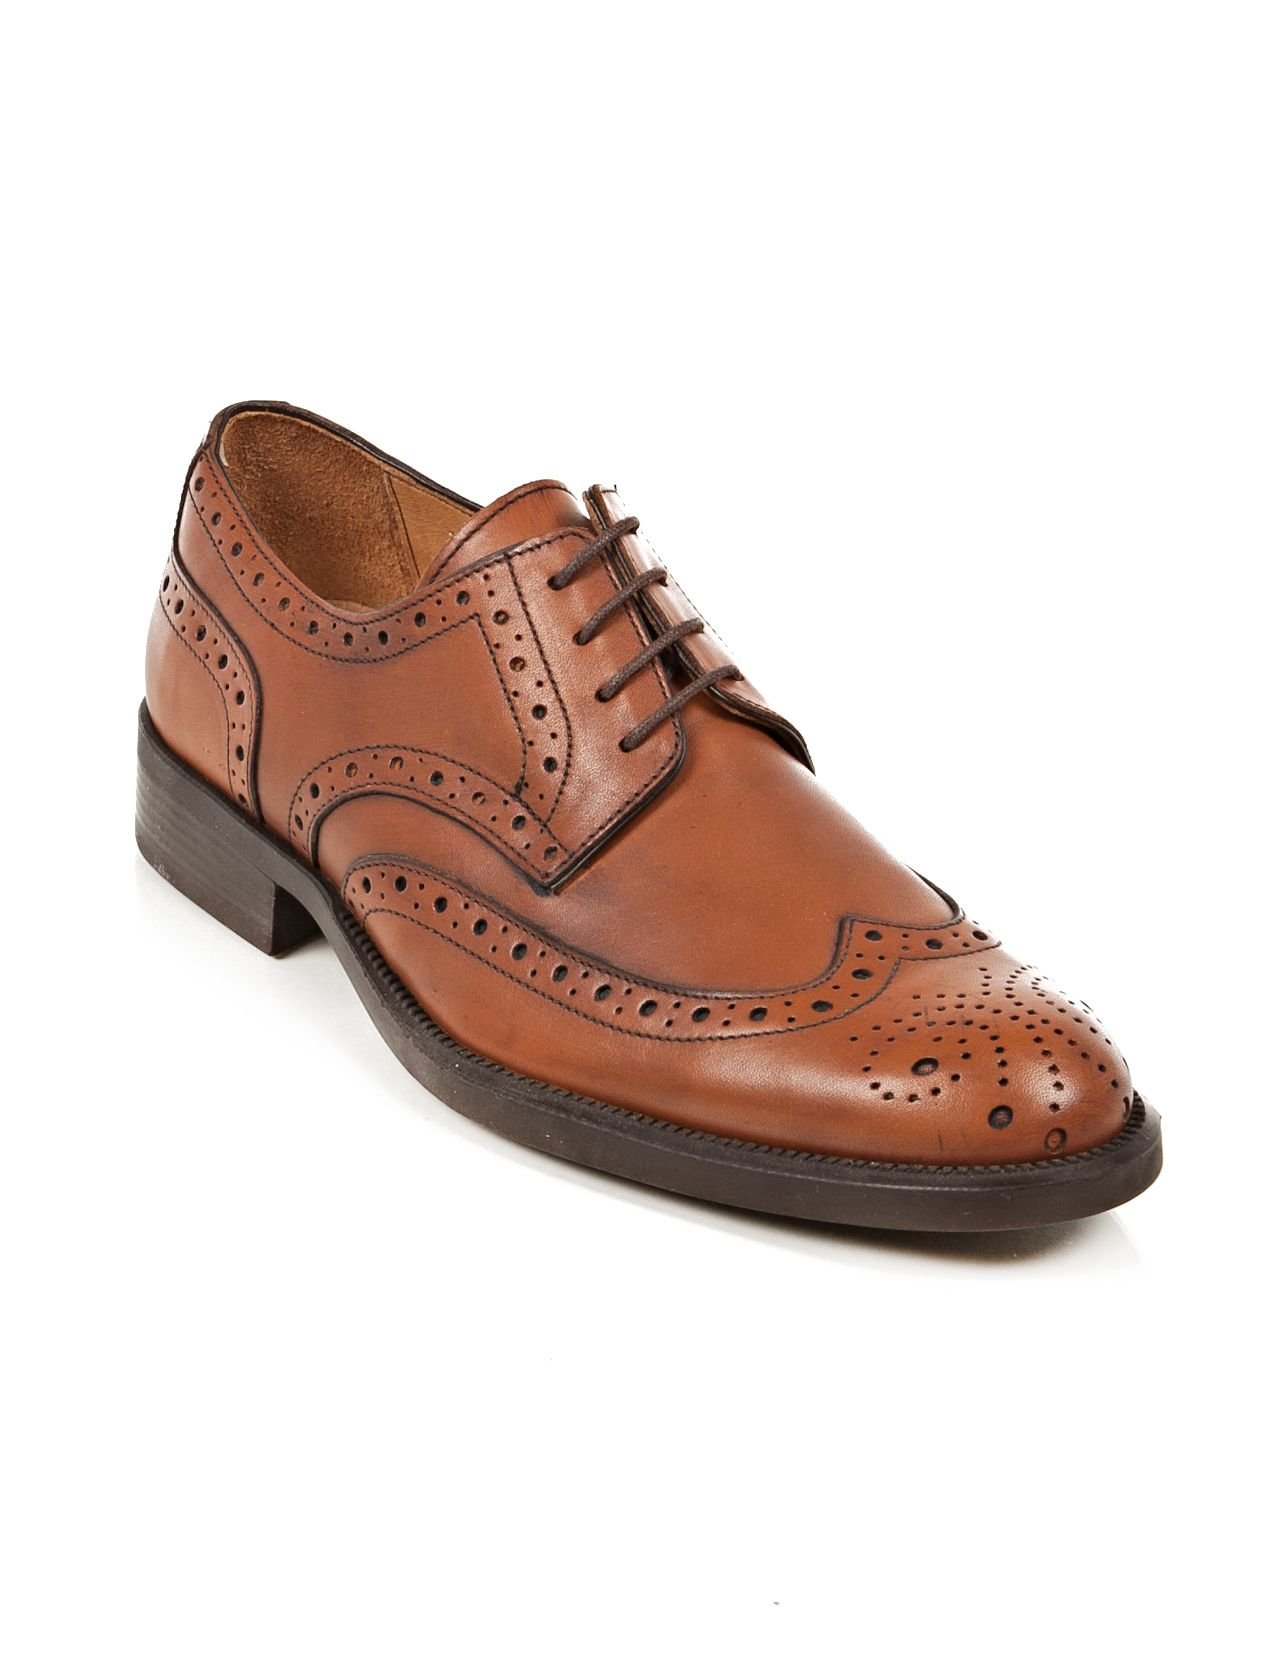 Leather classic men's shoes